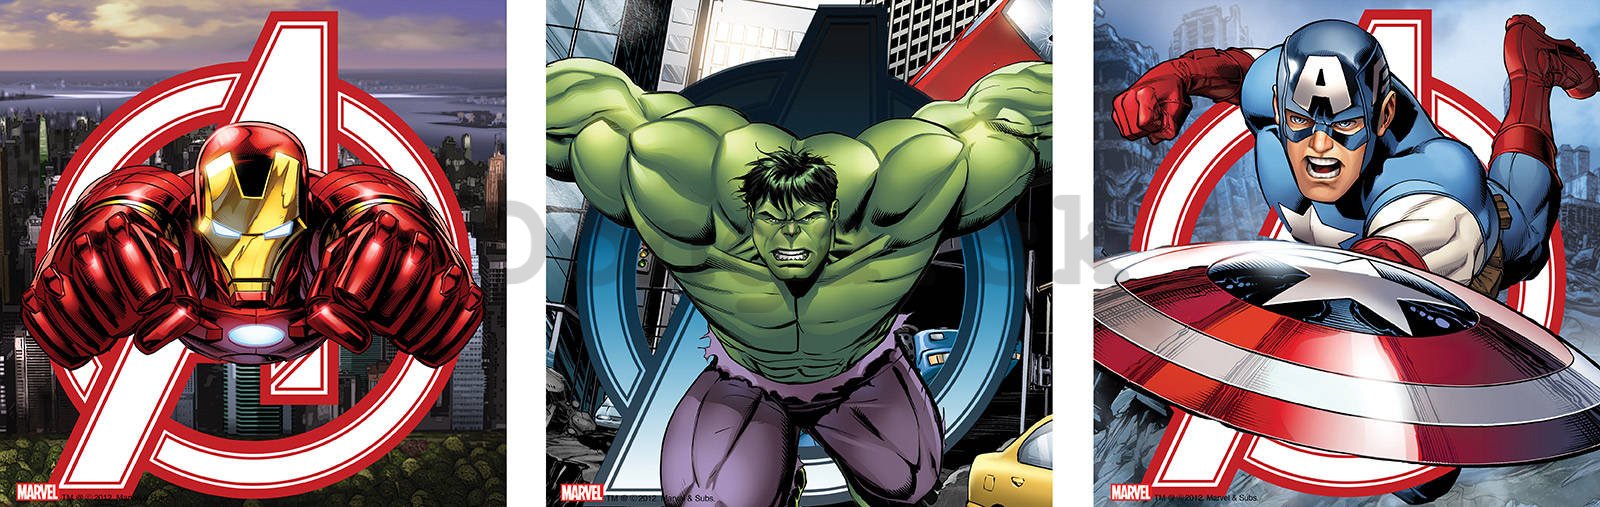 Obraz na plátne: Avengers (Iron Man, Hulk, Captain America) - set 3ks 30x30 cm